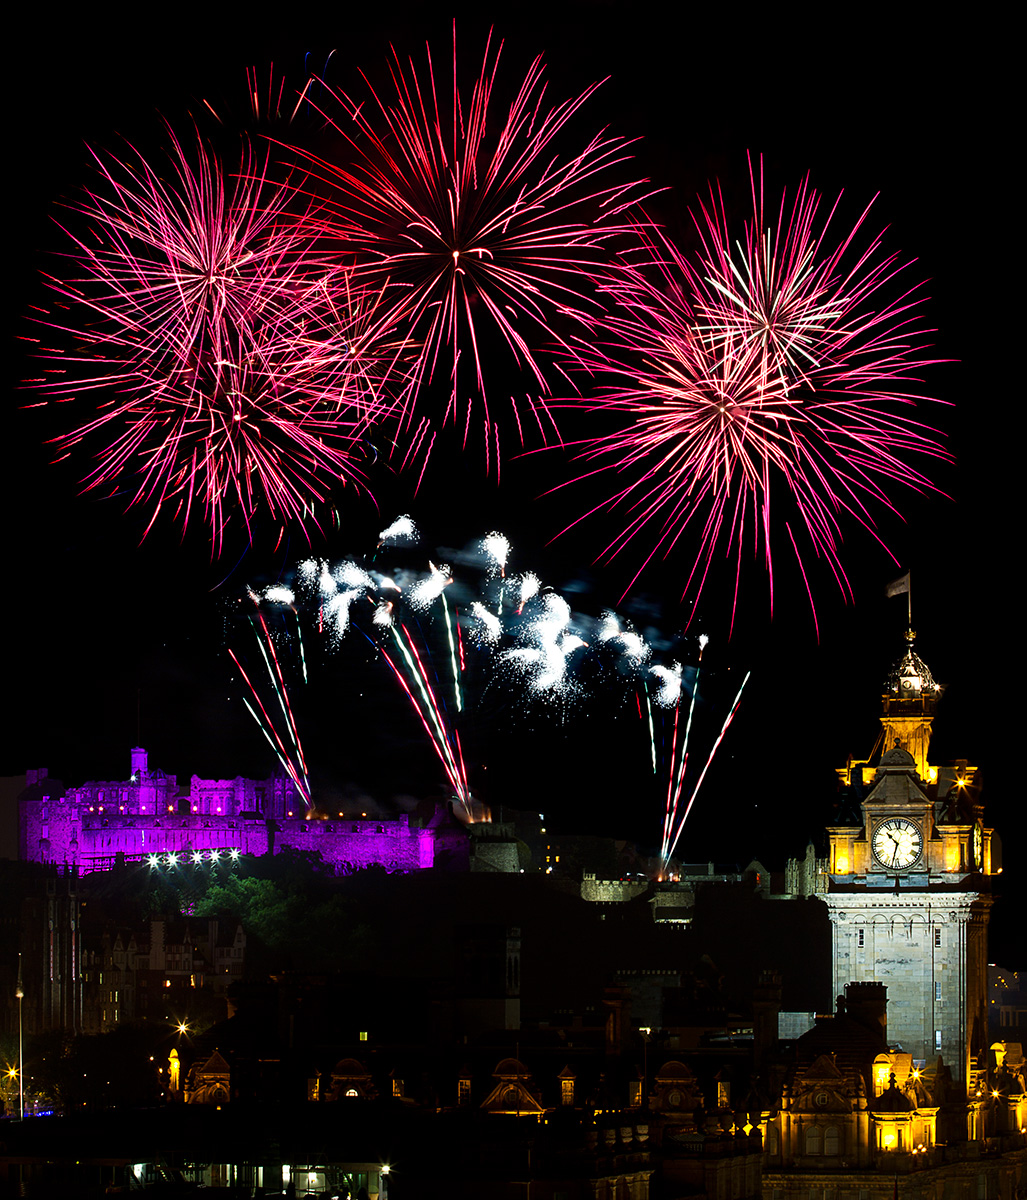 Edinburgh Tattoo fireworks from Calton Hill - 23rd August 2013